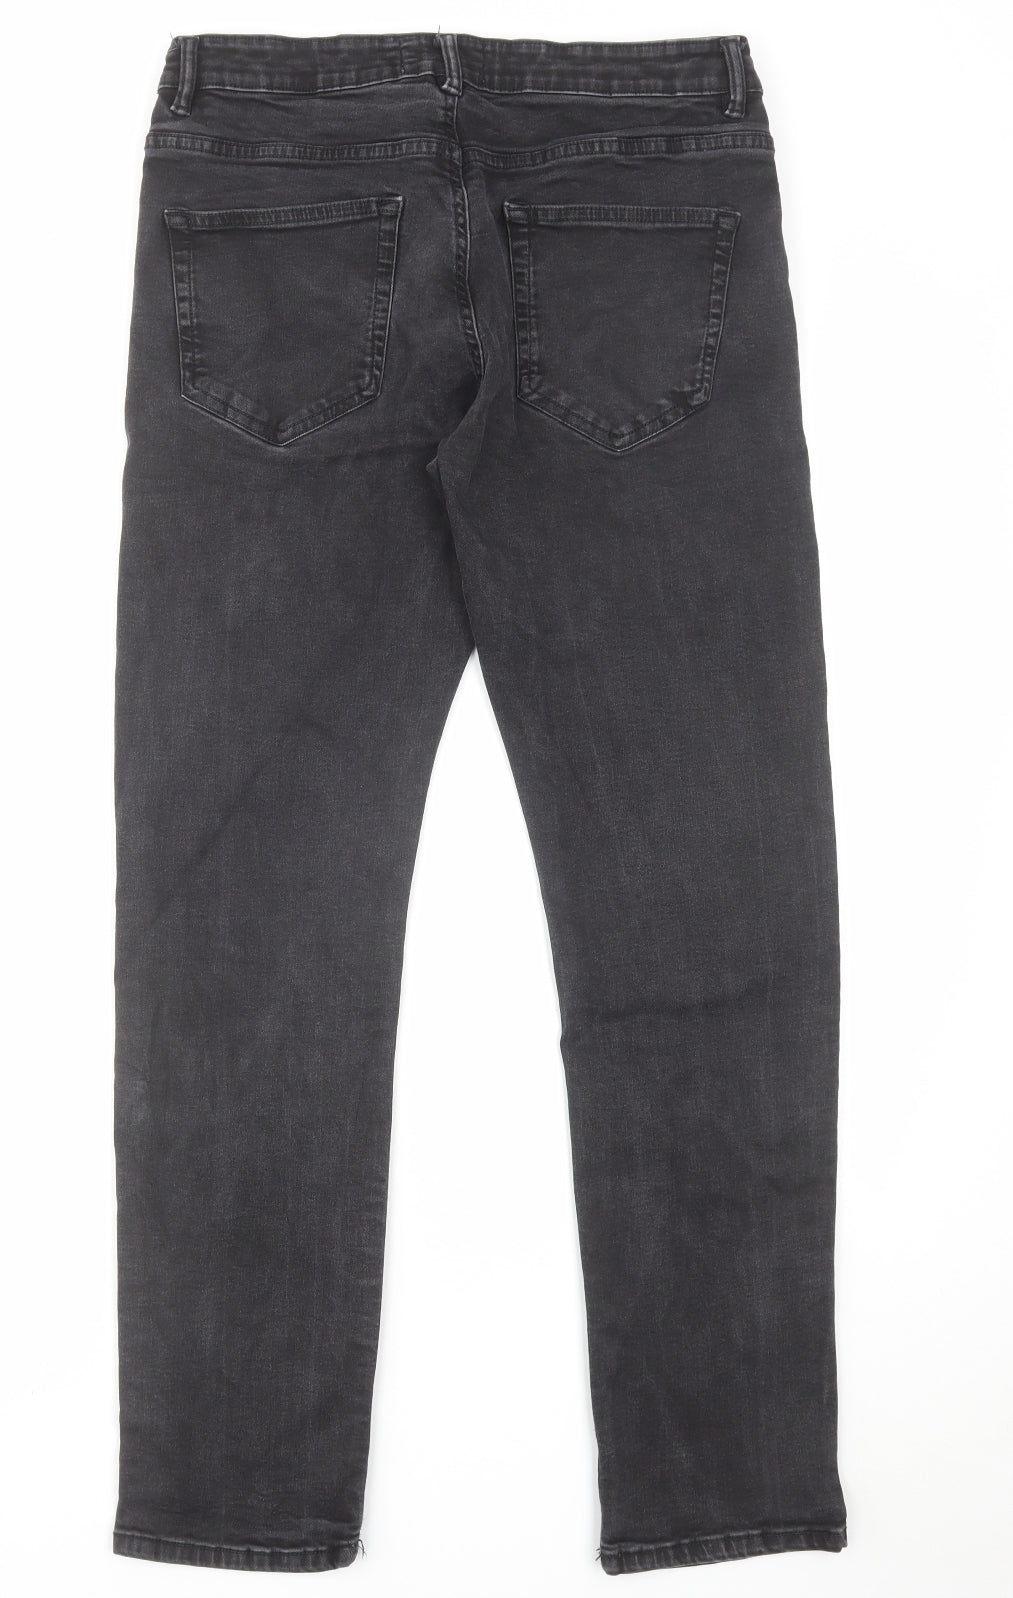 Easy Mens Blue Cotton Skinny Jeans Size 34 in L32 in Slim Zip